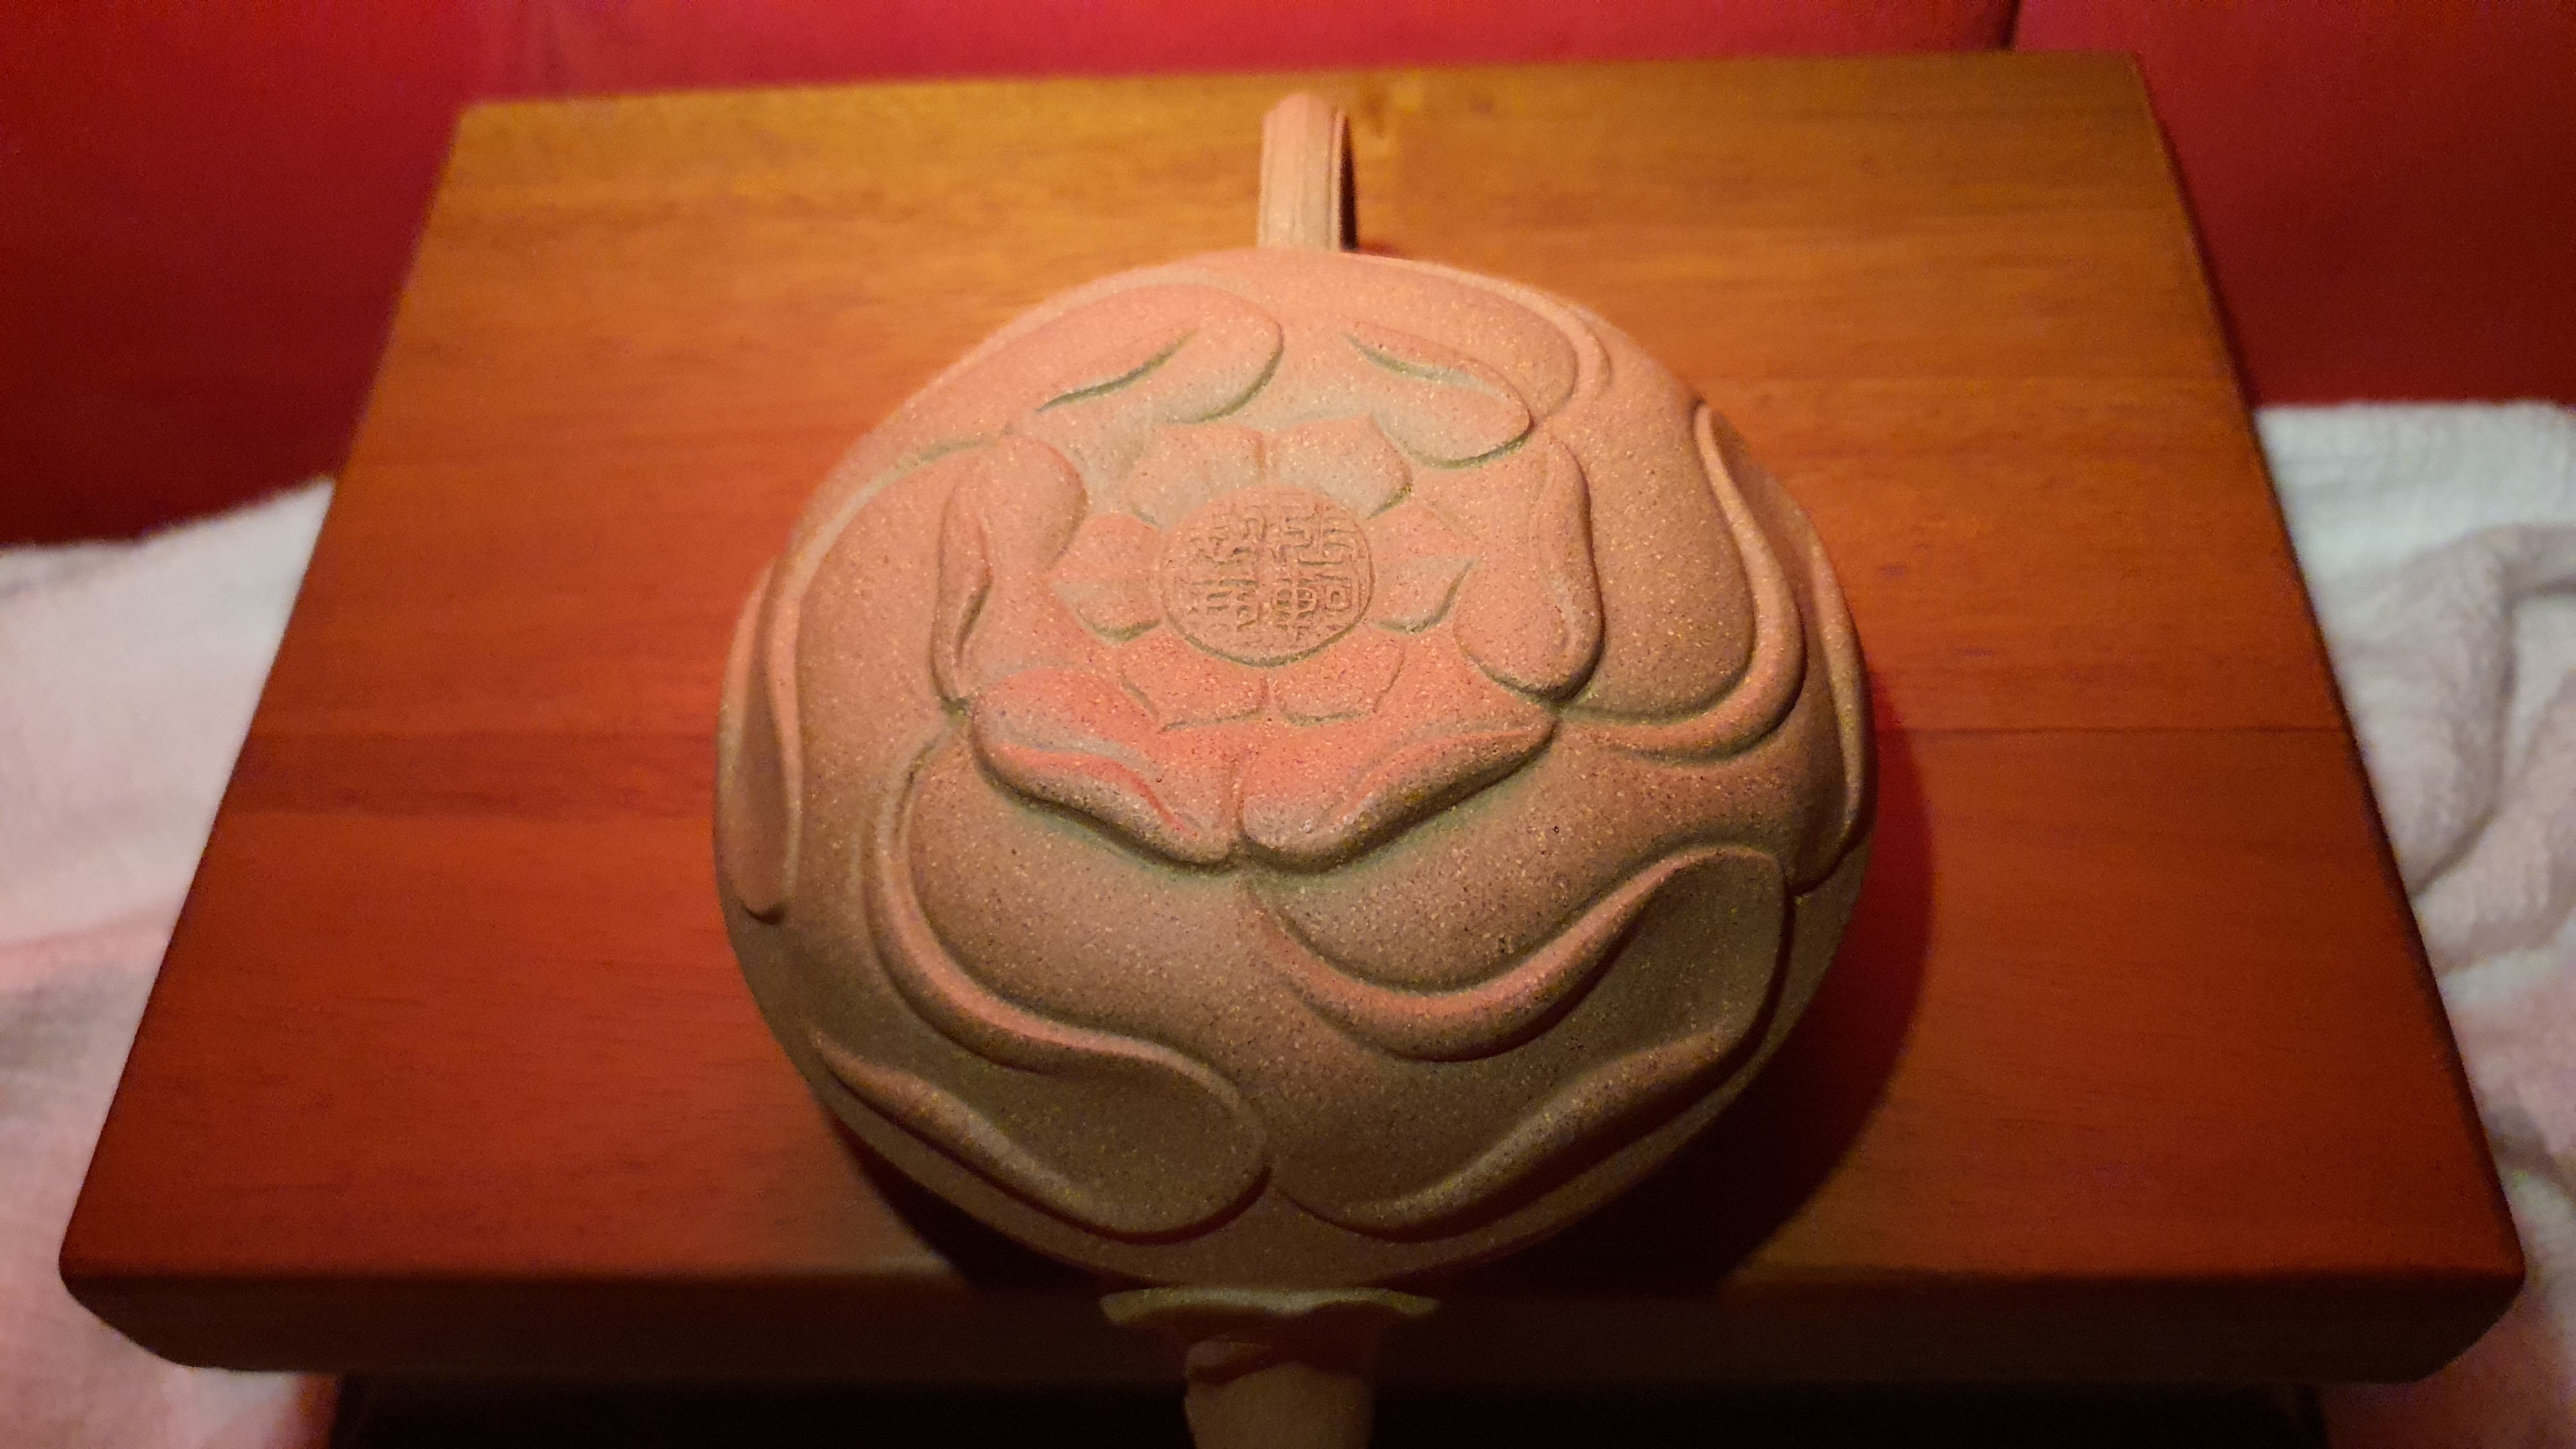 "Feng Juan Kui" 风卷葵 - Ornate Pot by L4 Associate Master Artist Zhang Ke 张轲